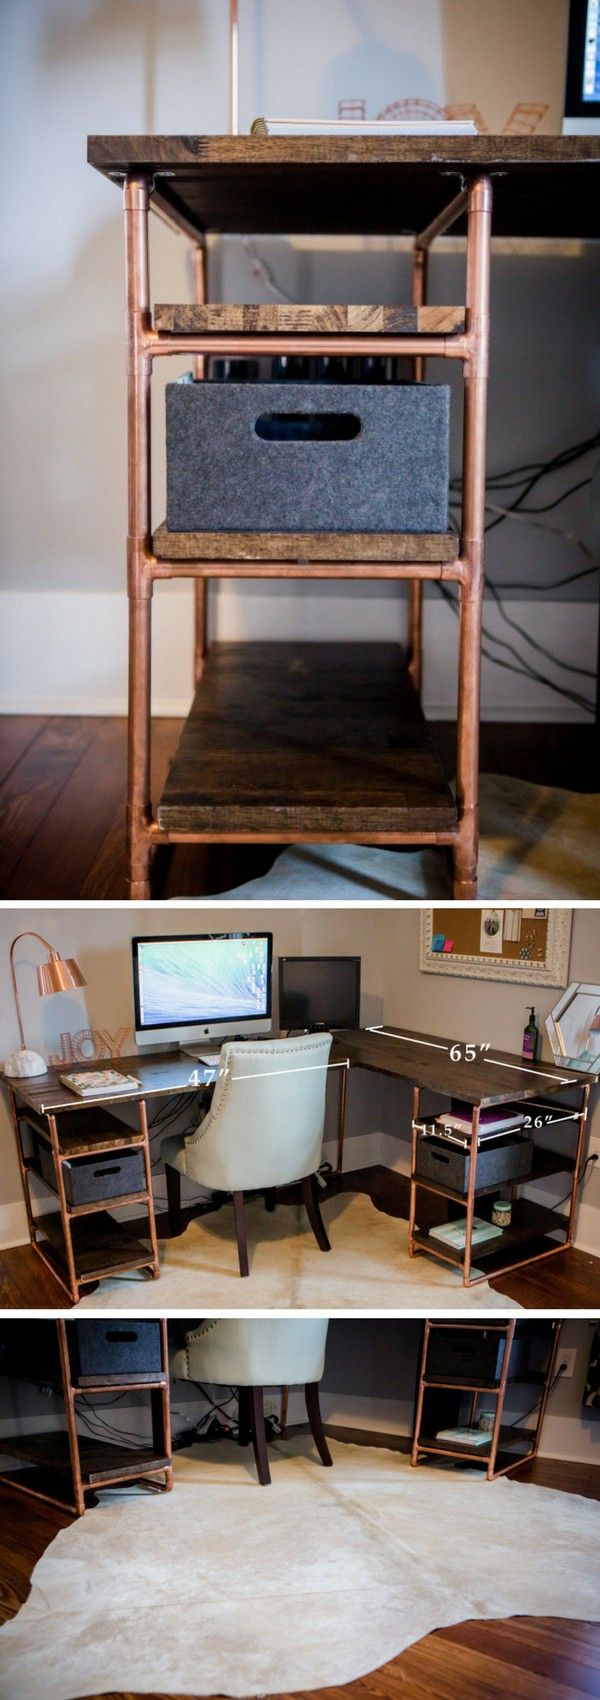 DIY Desks You Can Build on a Budget